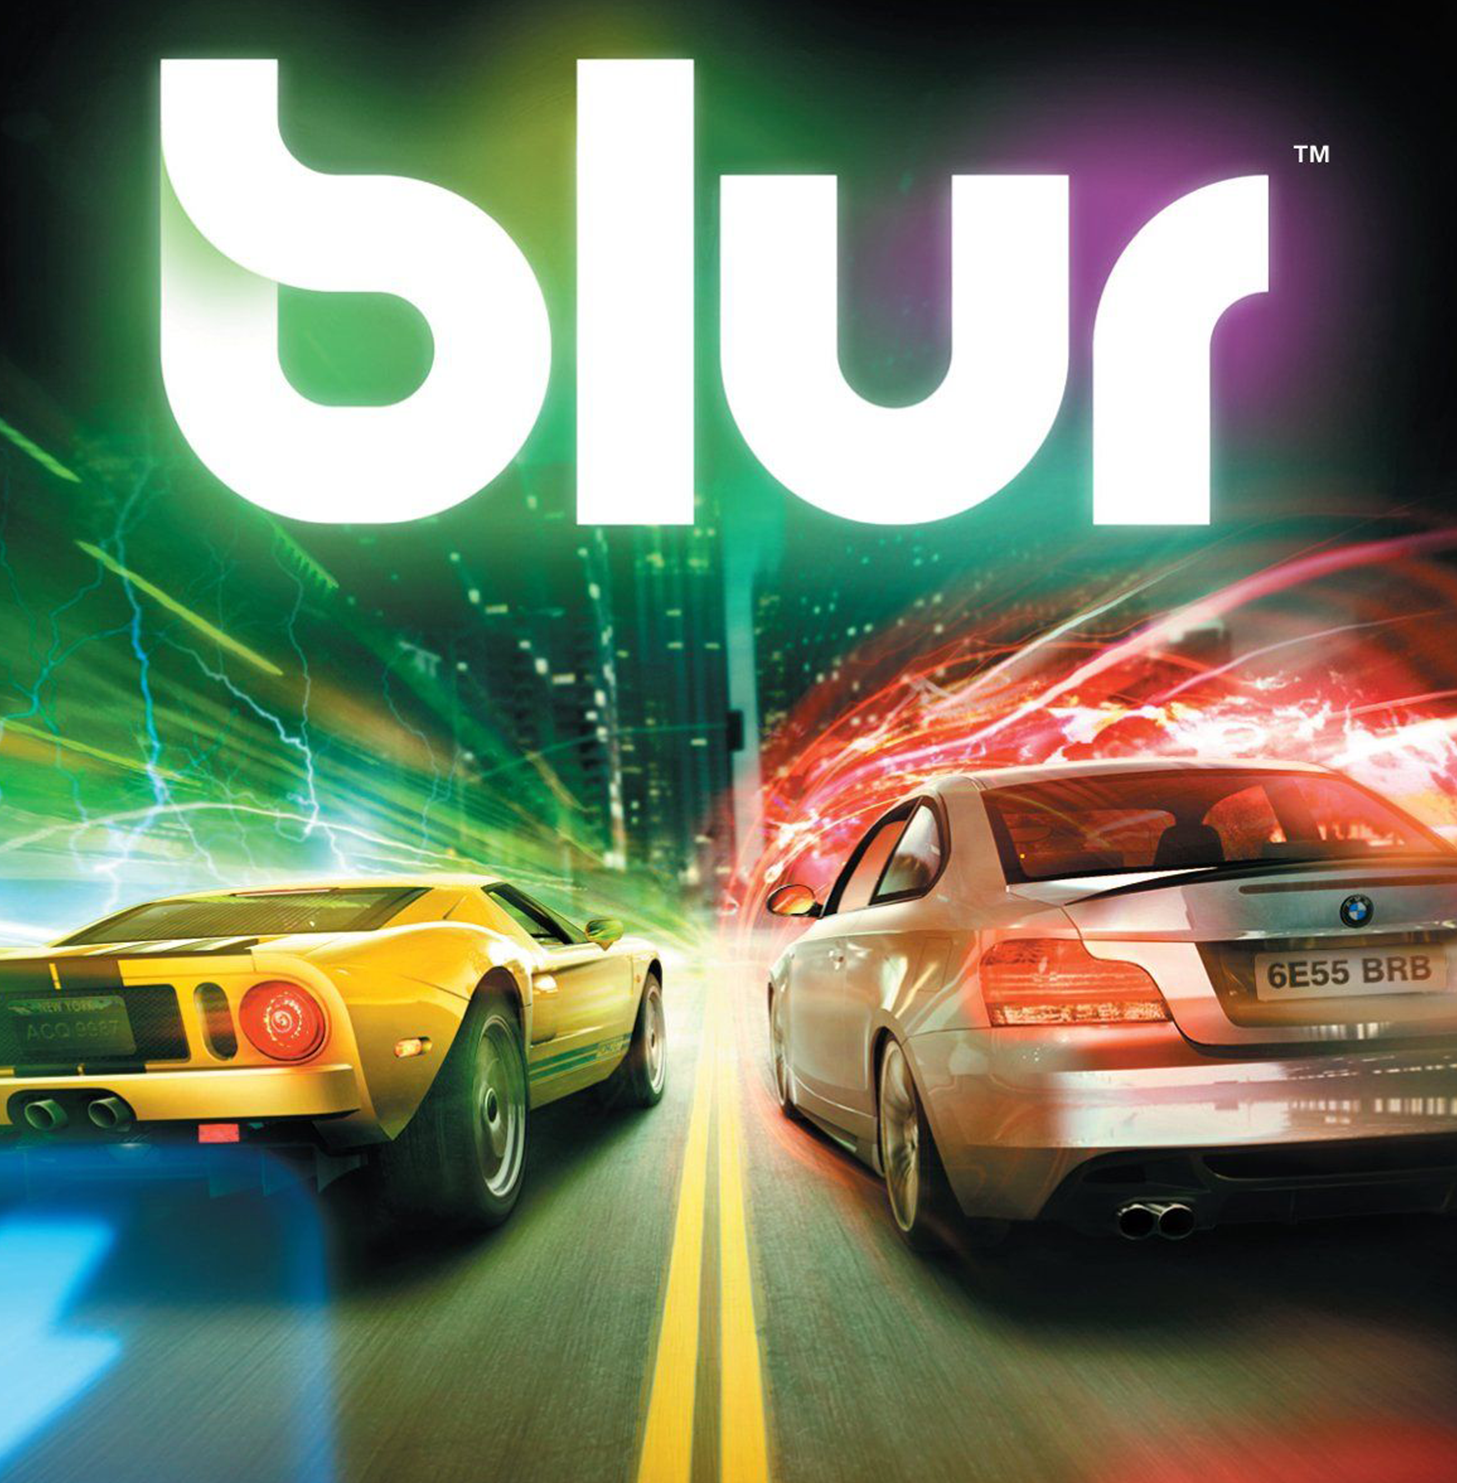 Blur PC Game Latest Version Free Download